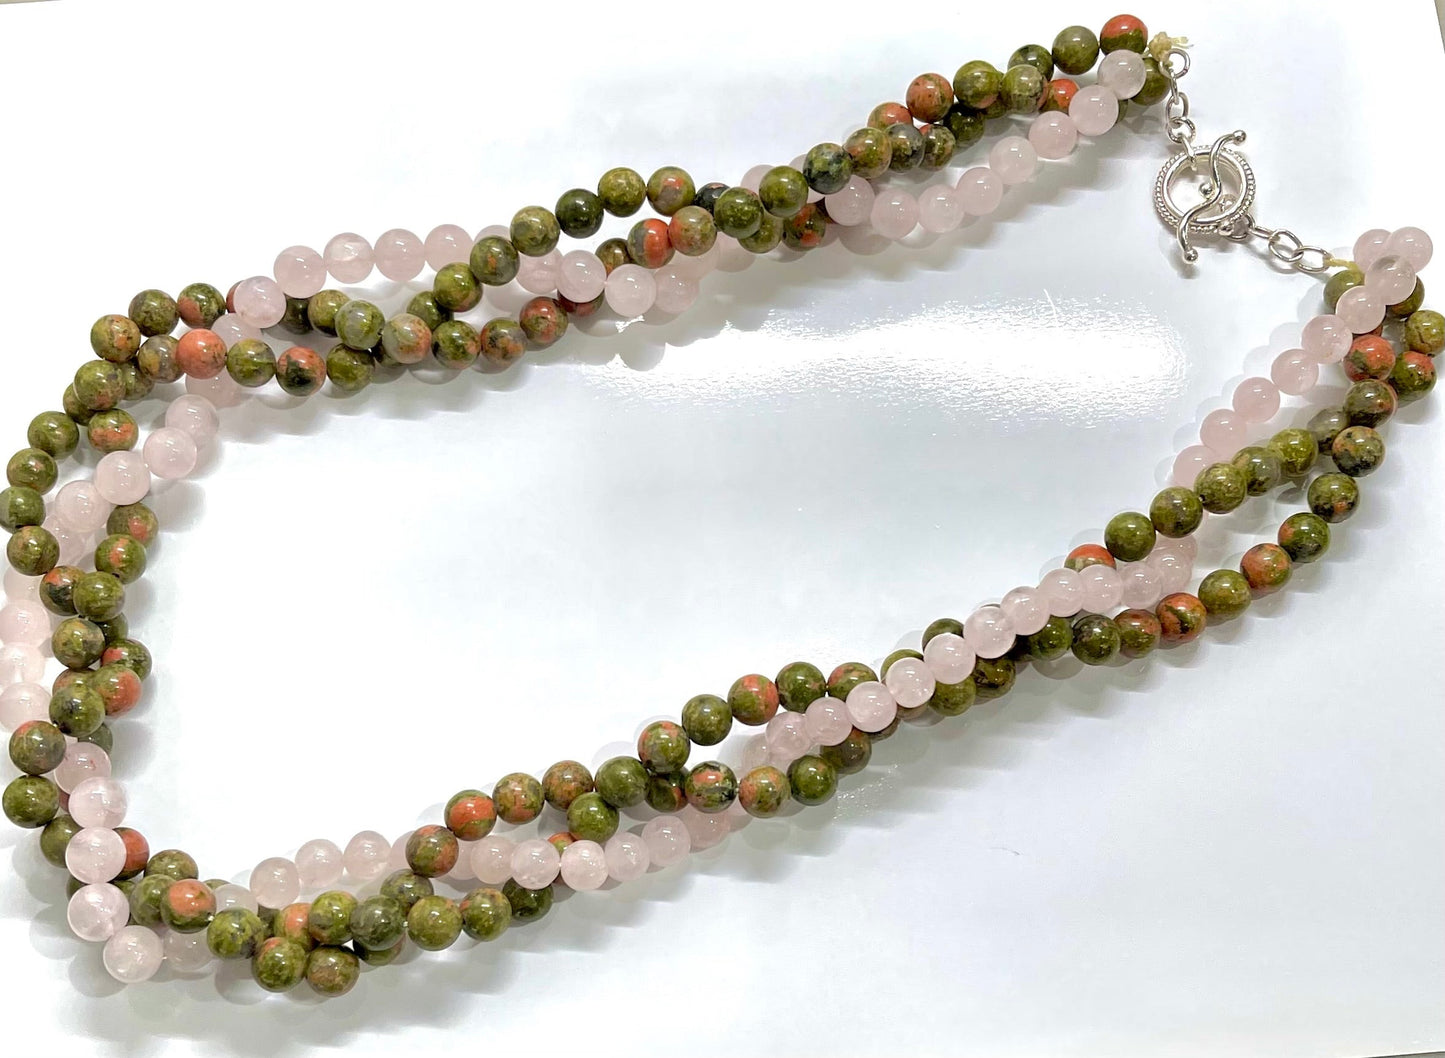 Natural Rose Quartz and Unakite Gemstone Triple-Strand Statement Necklace 24"